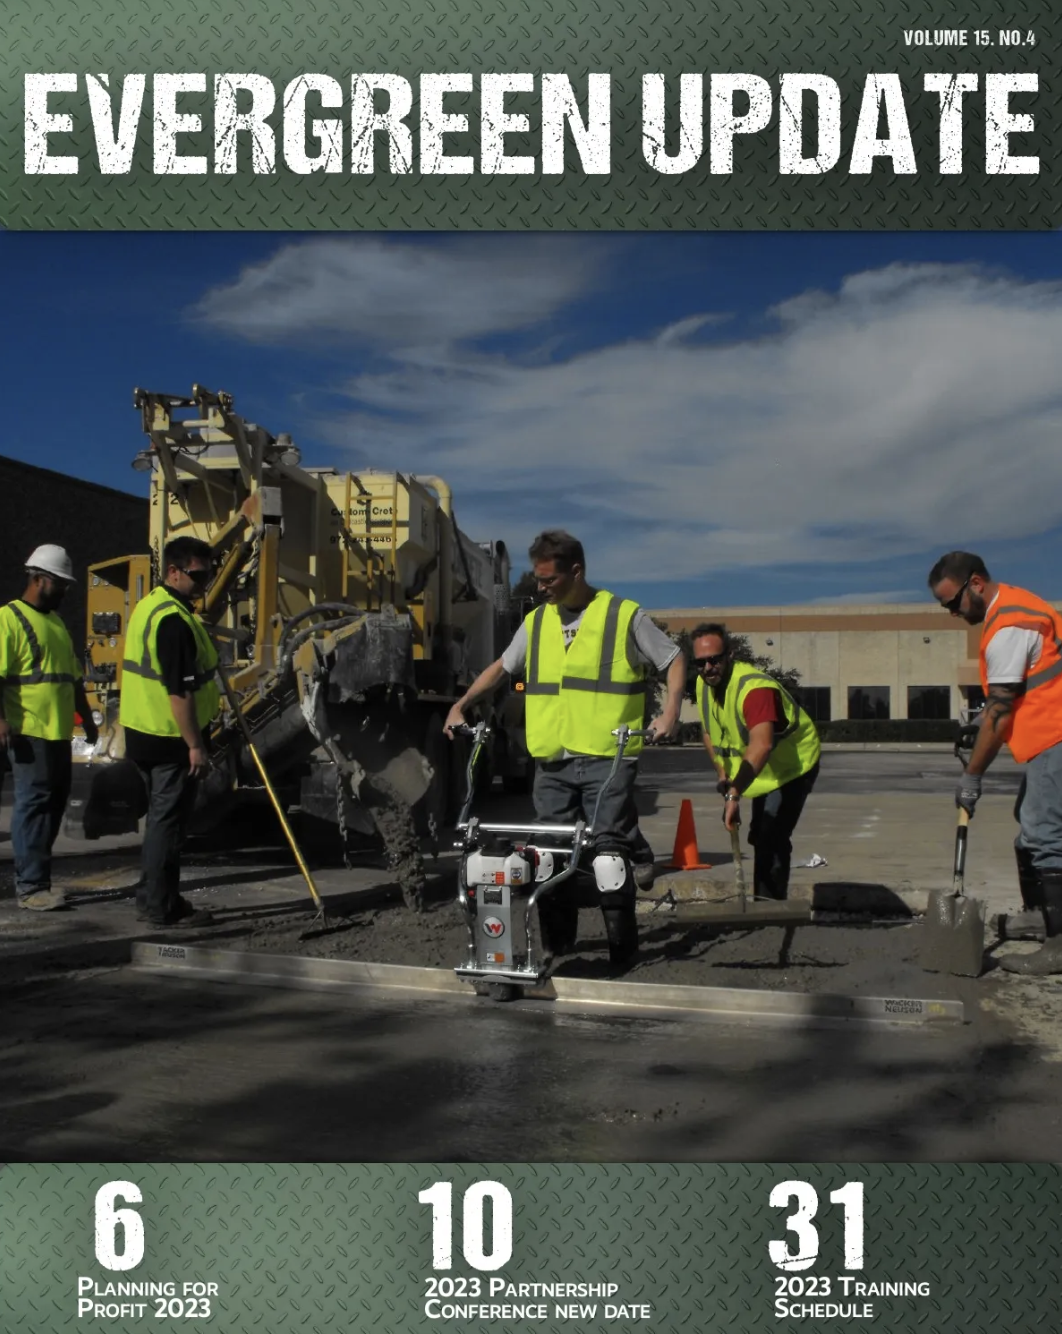 Evergreen Update Fall 2022